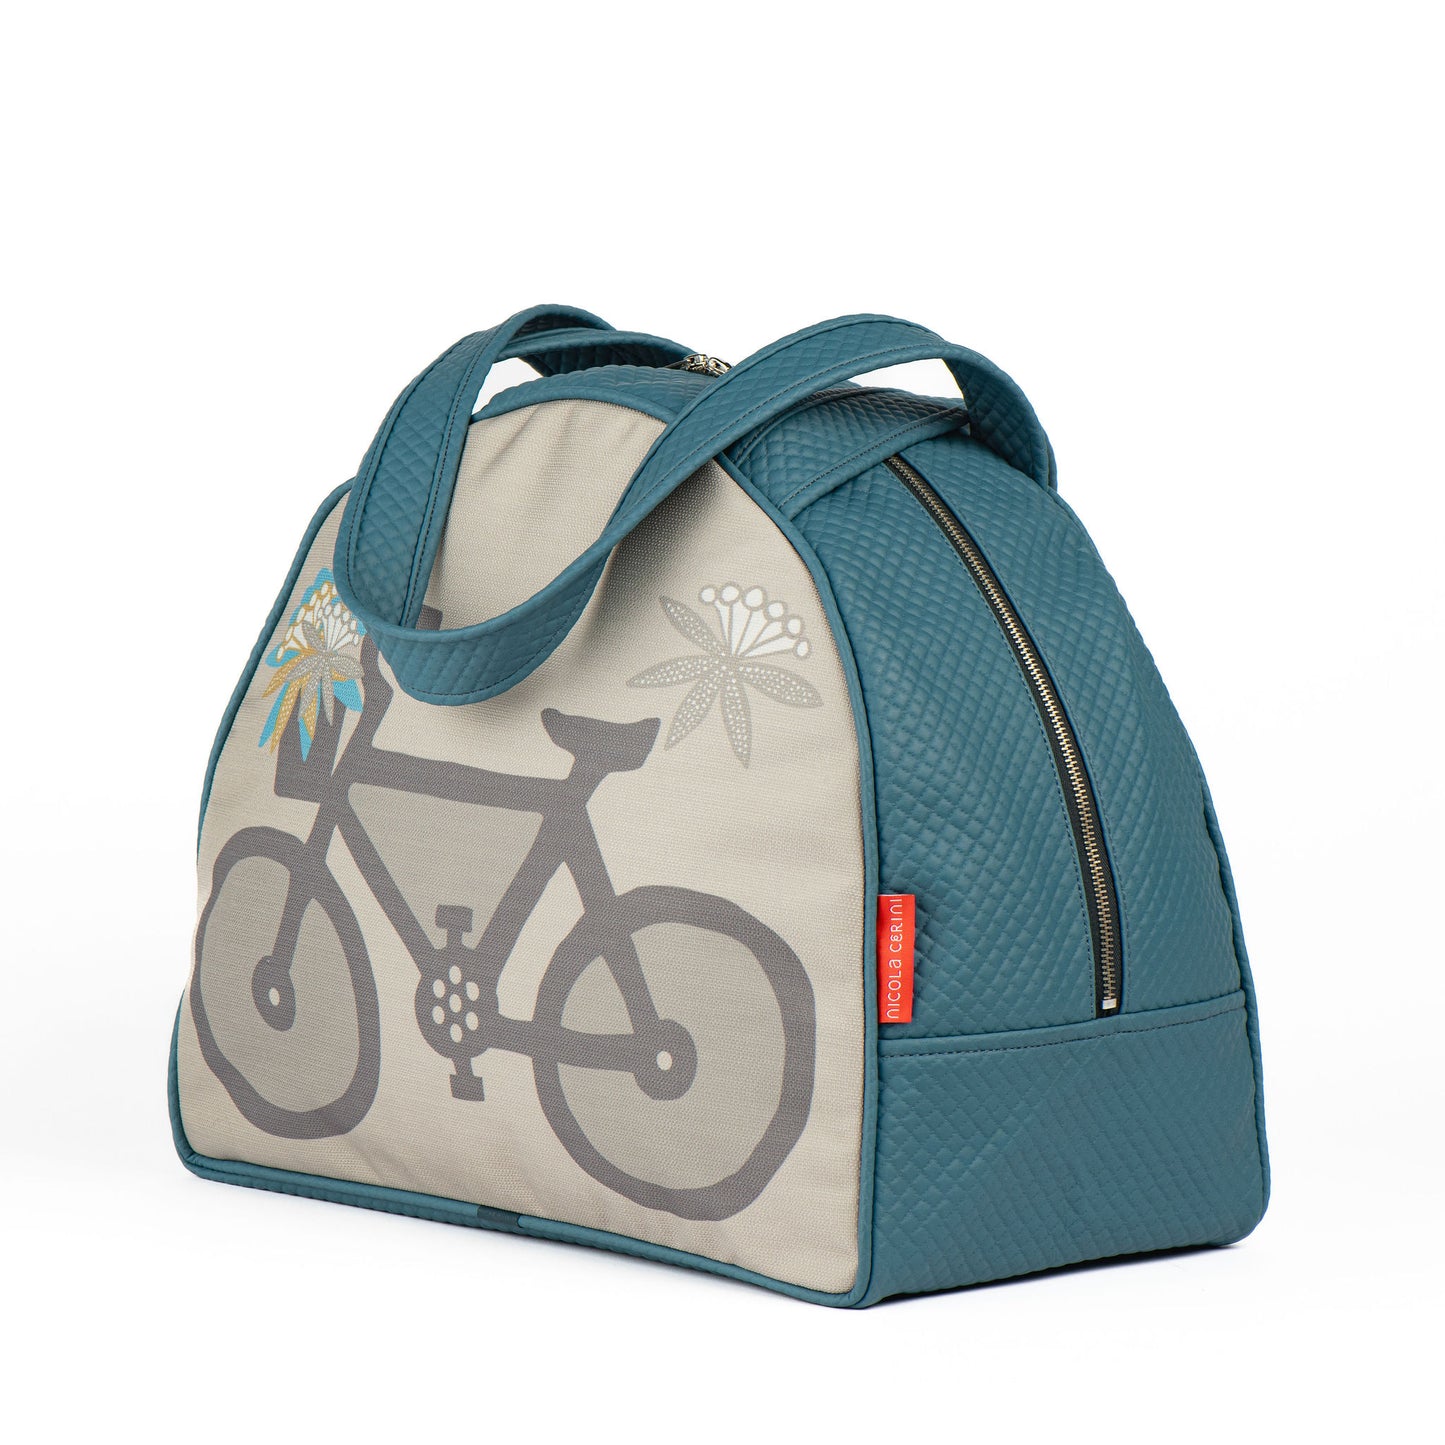 Bike Overnight Bag- Limited Edition 30% OFF LAST FEW!